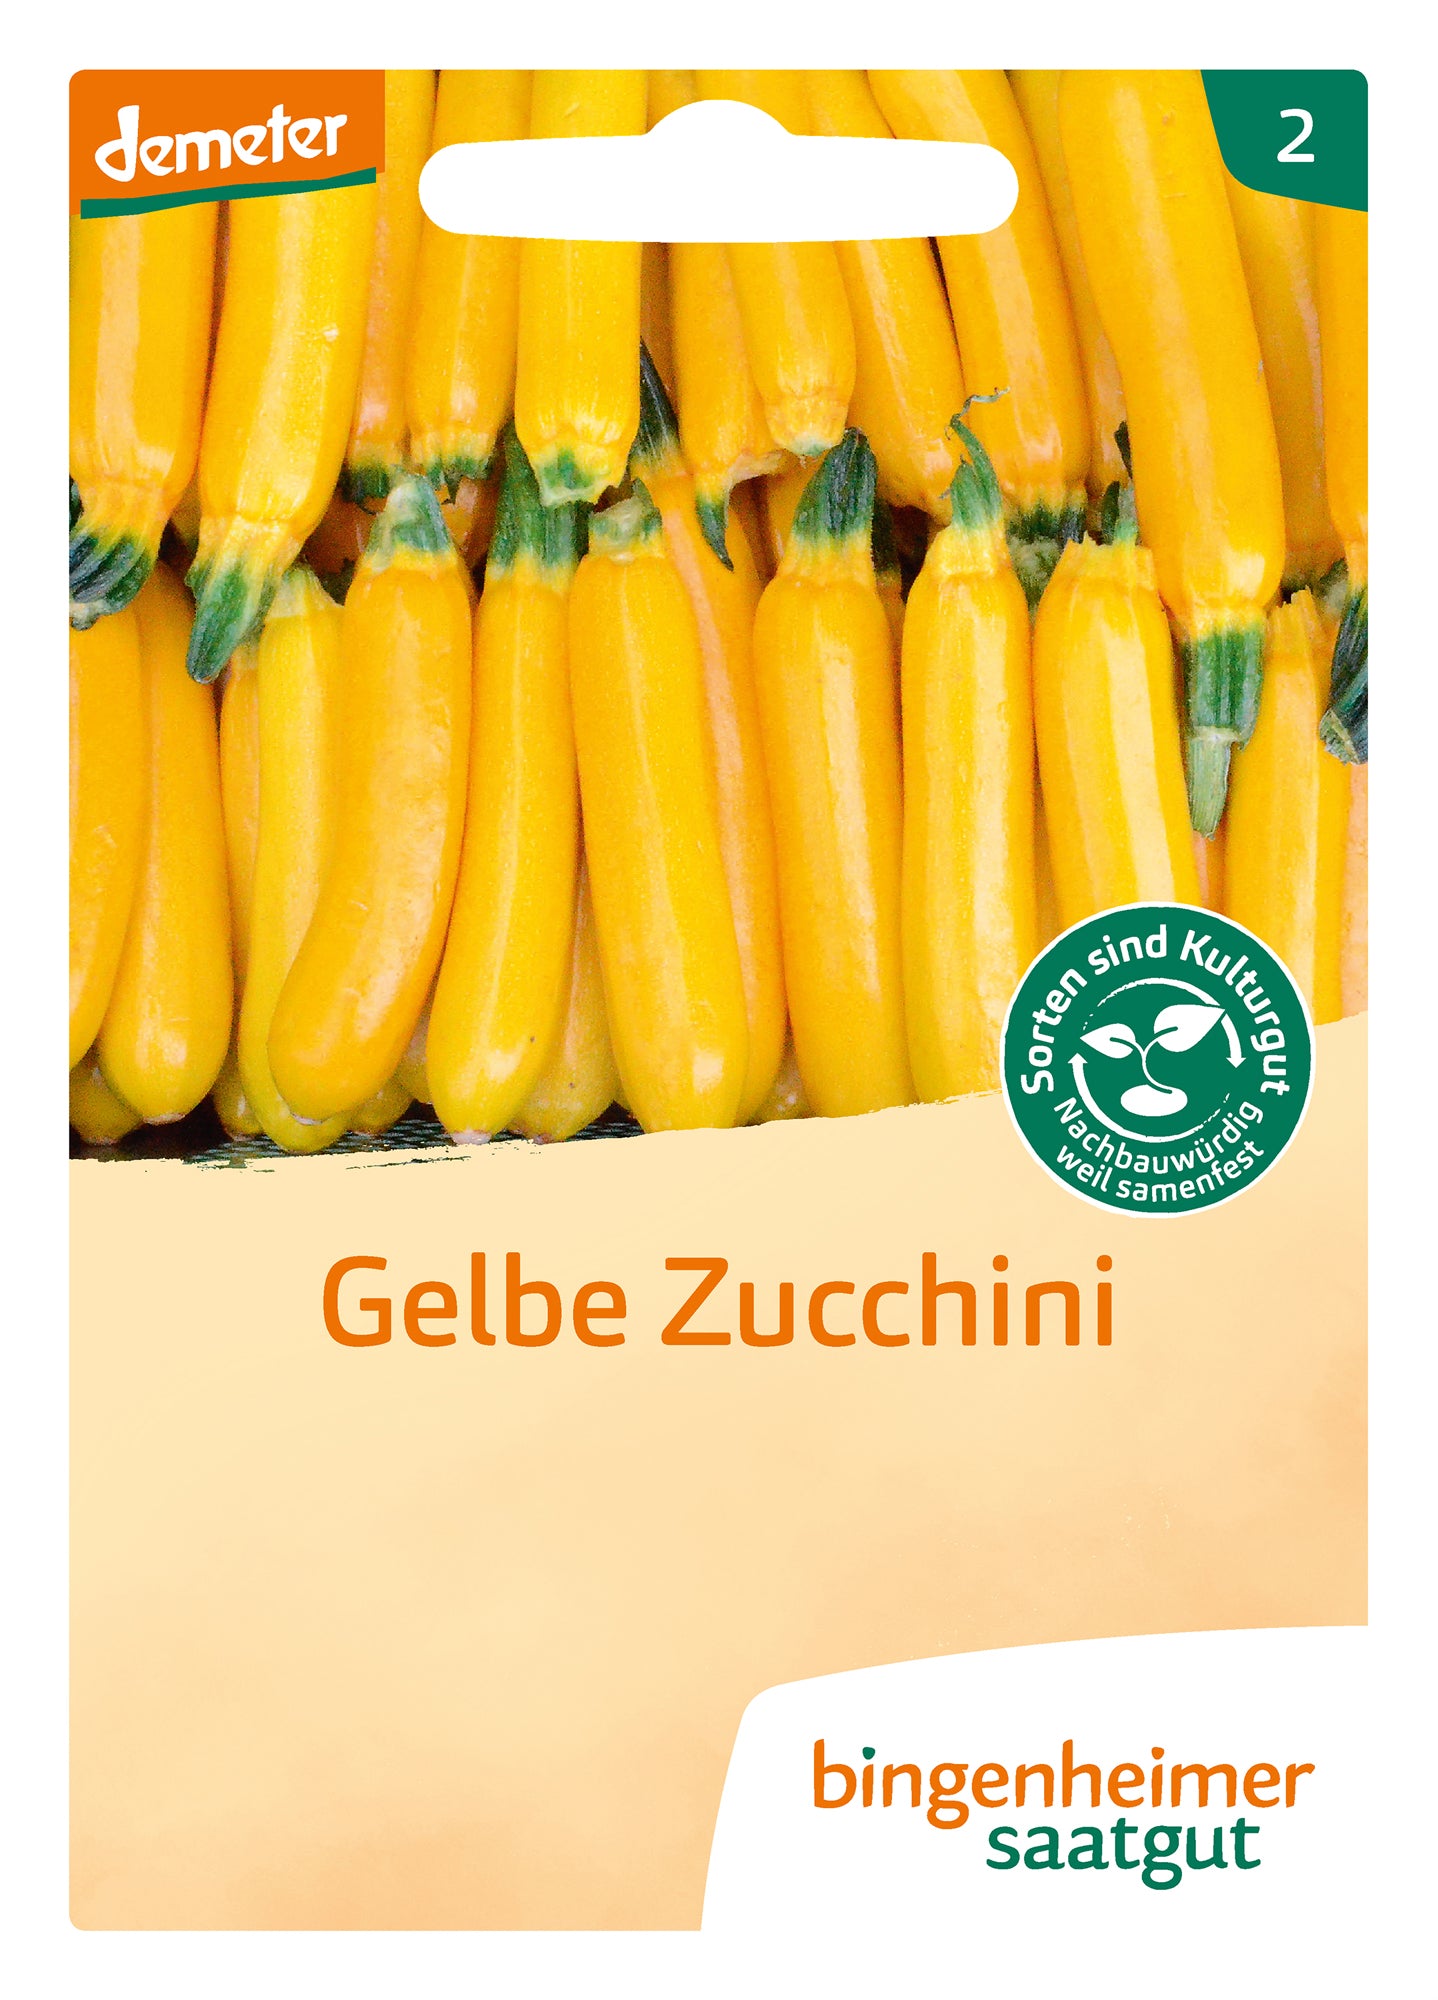 Zucchini Solara | BIO Zucchinisamen von Bingenheimer Saatgut